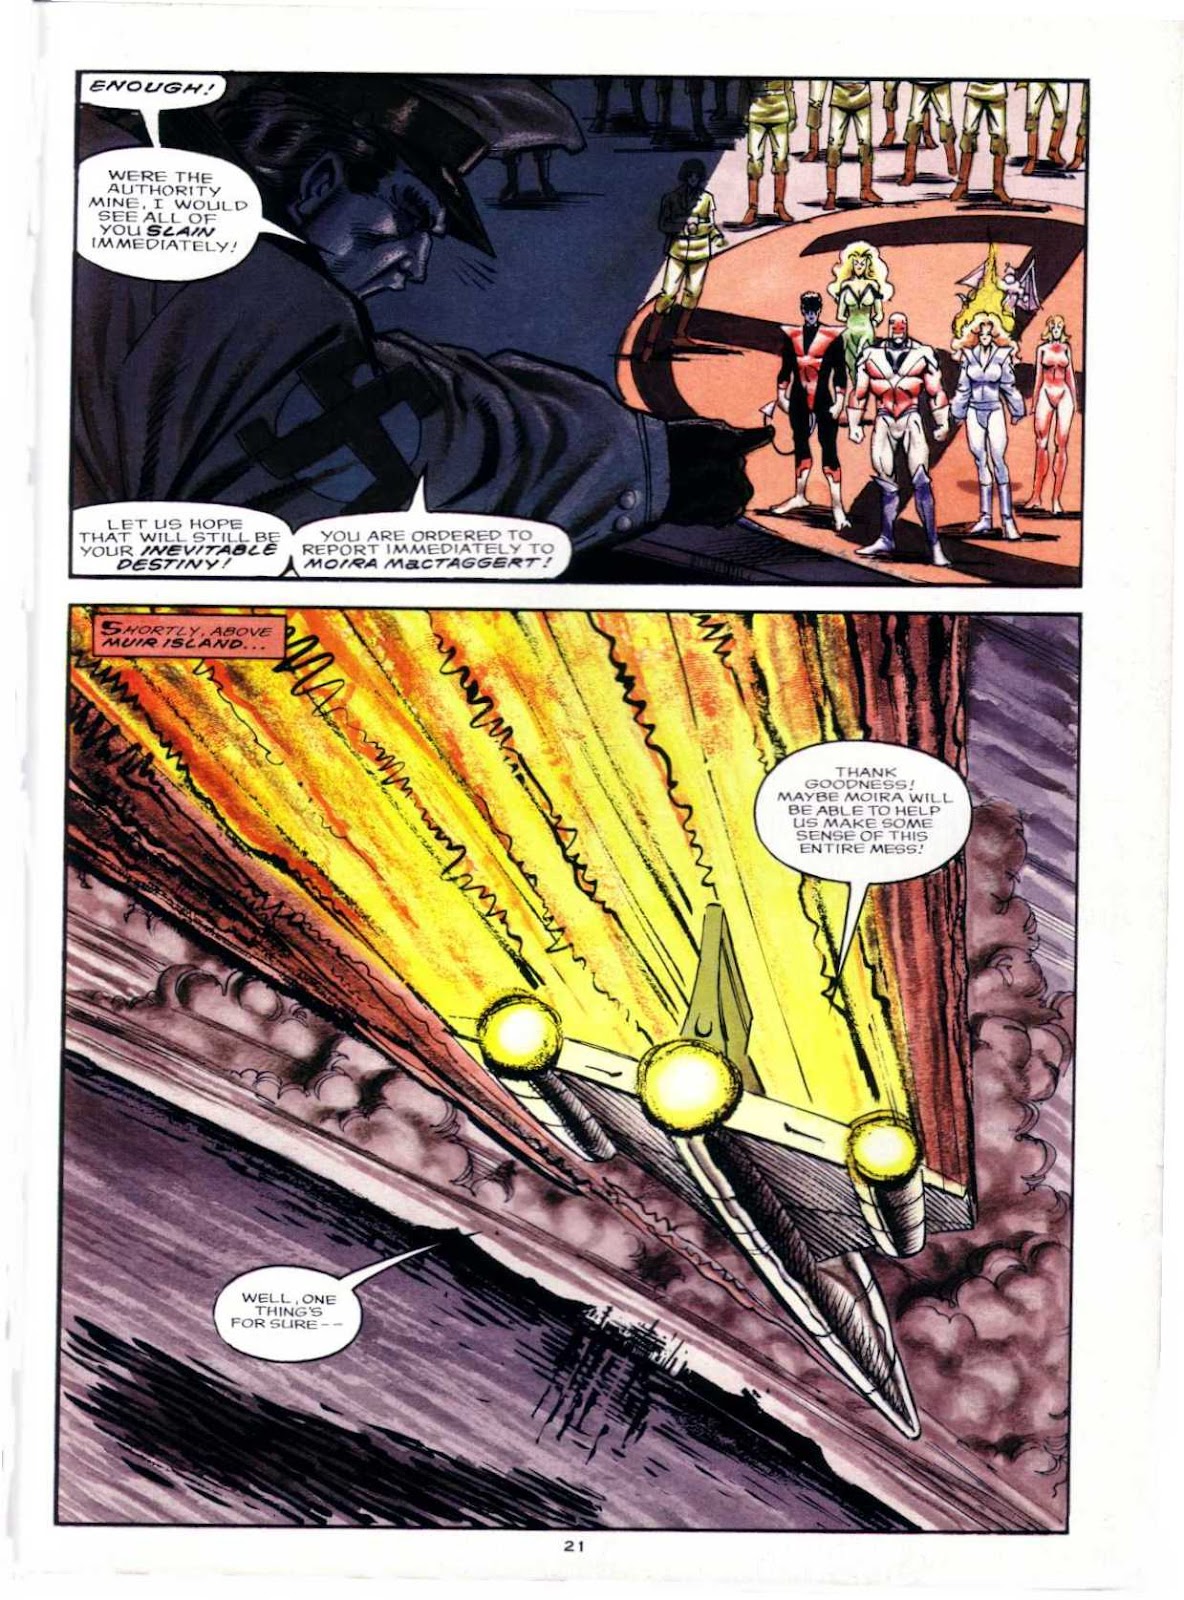 Marvel Graphic Novel issue 66 - Excalibur - Weird War III - Page 21